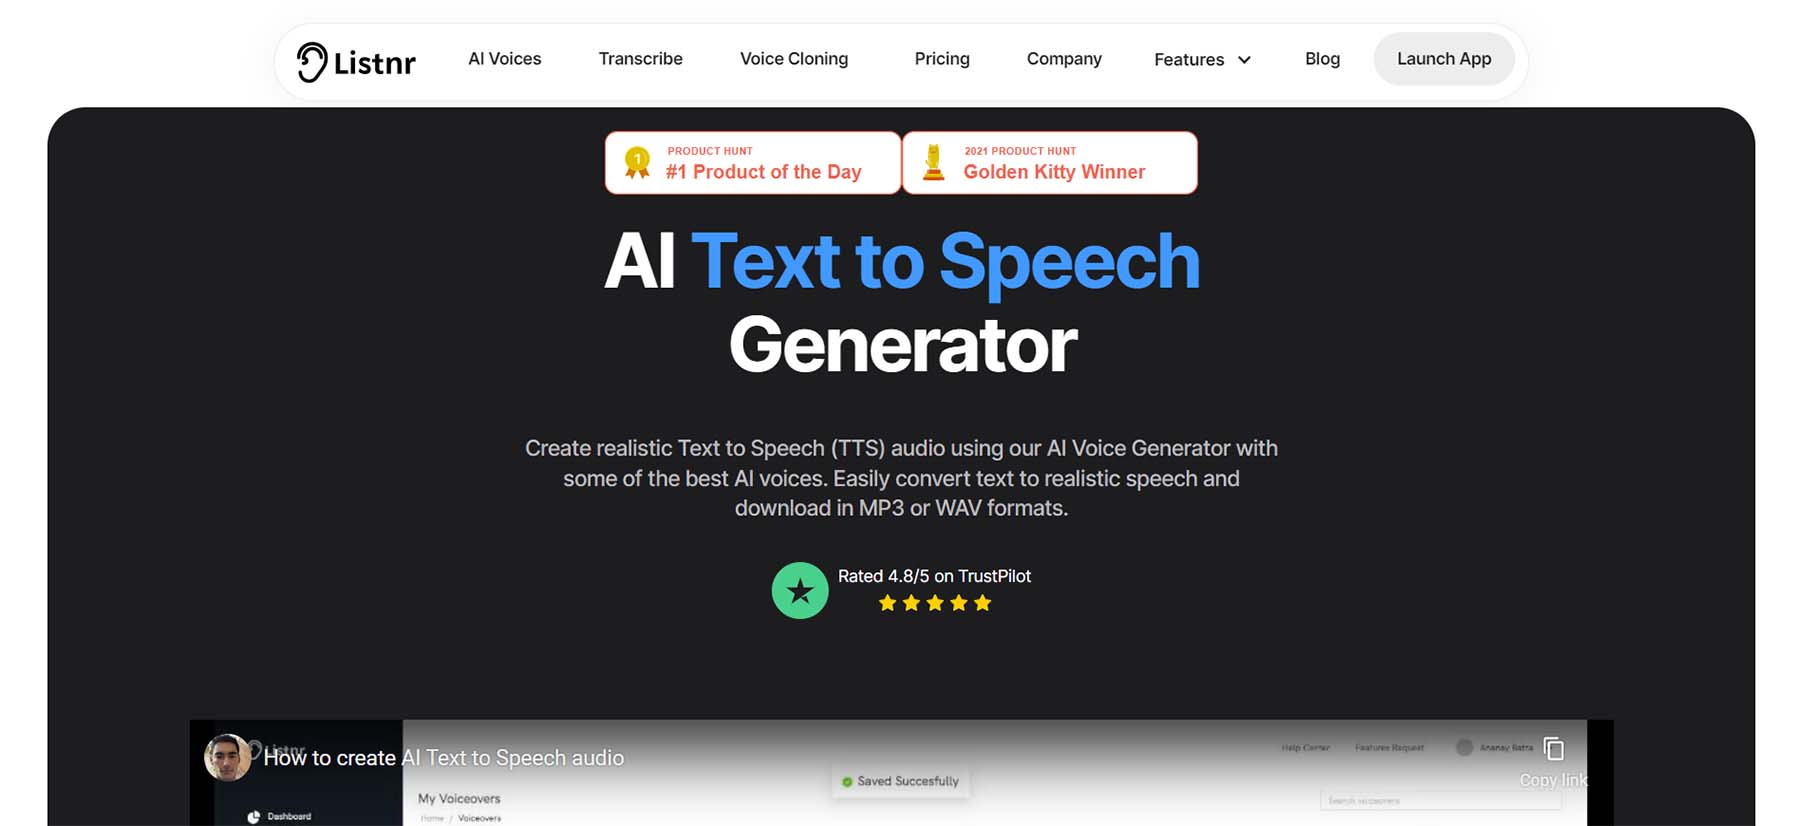 Listnr AI, An AI text-to-speech tool